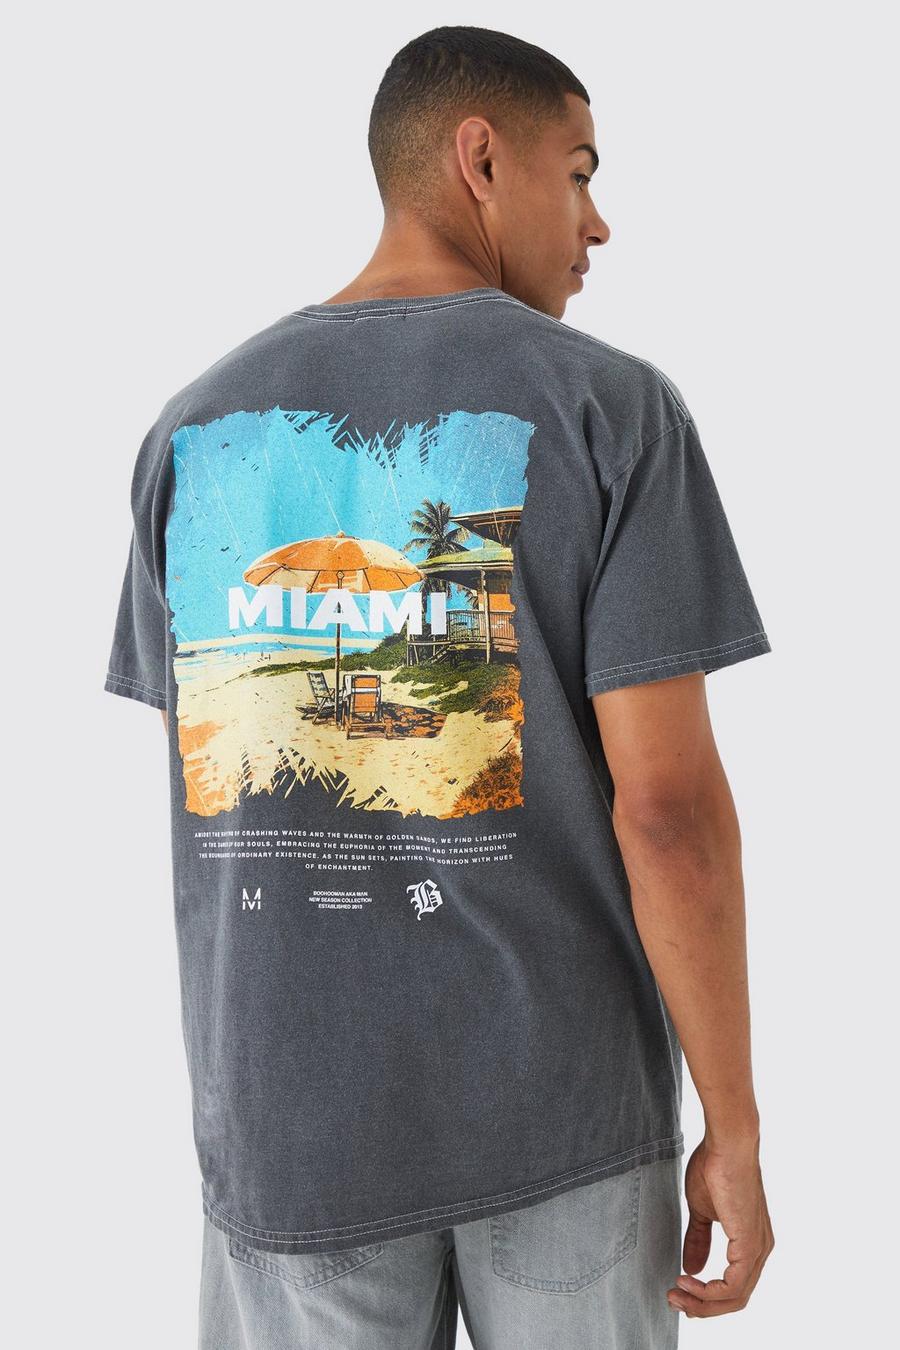 Charcoal grey Oversized Overdyed Miami Beach T-shirt